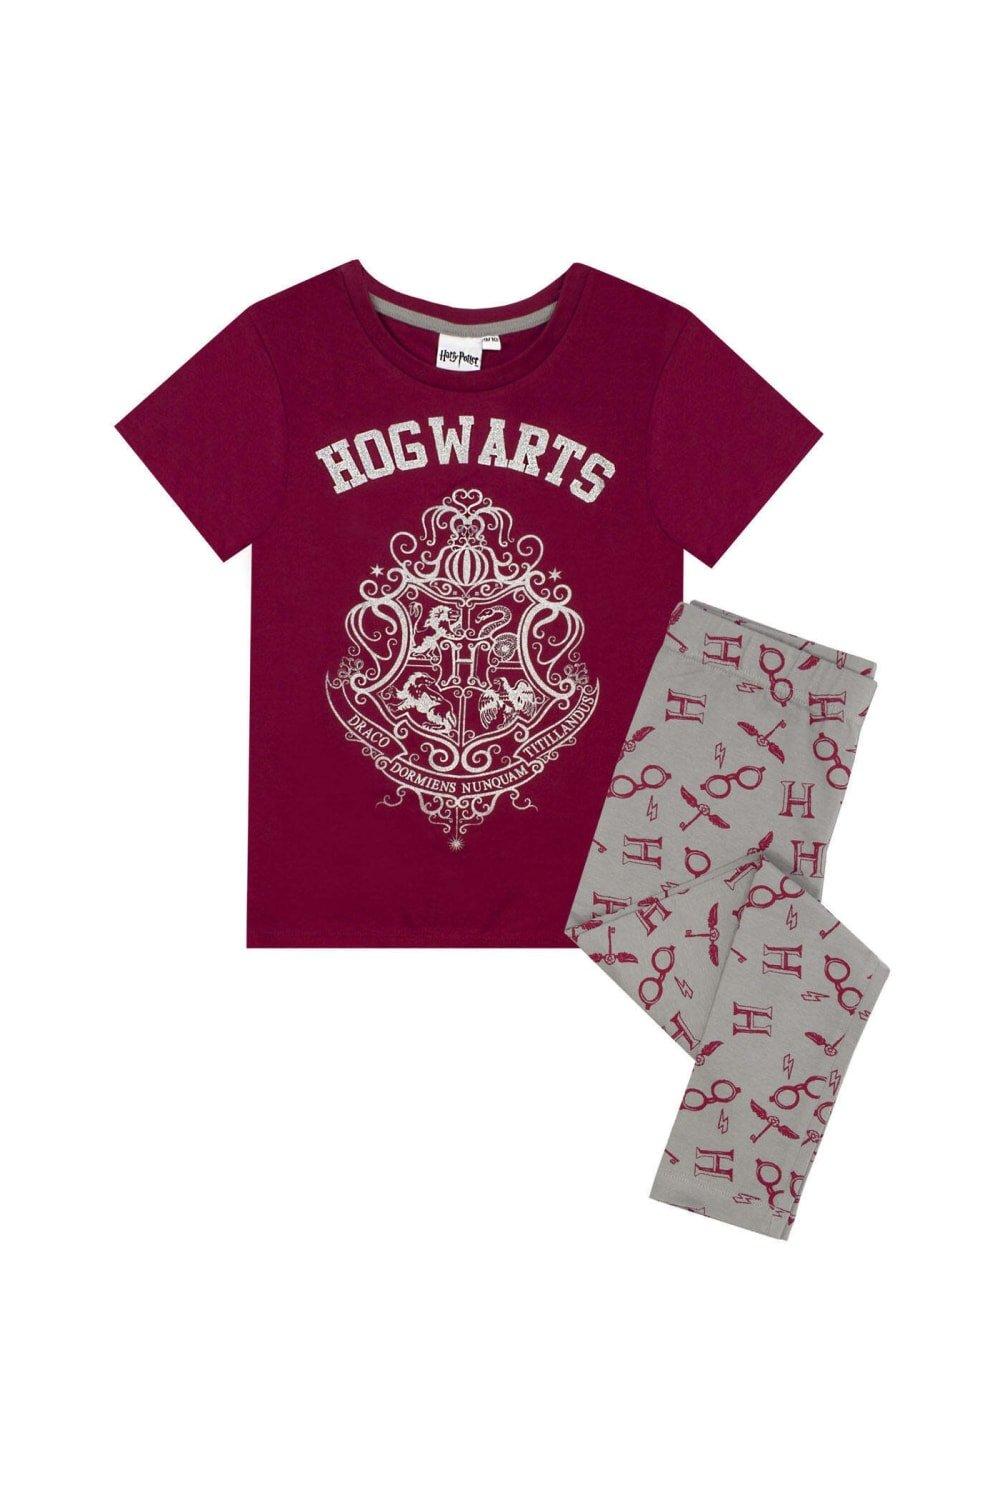 Hogwarts Crest Pyjama Set